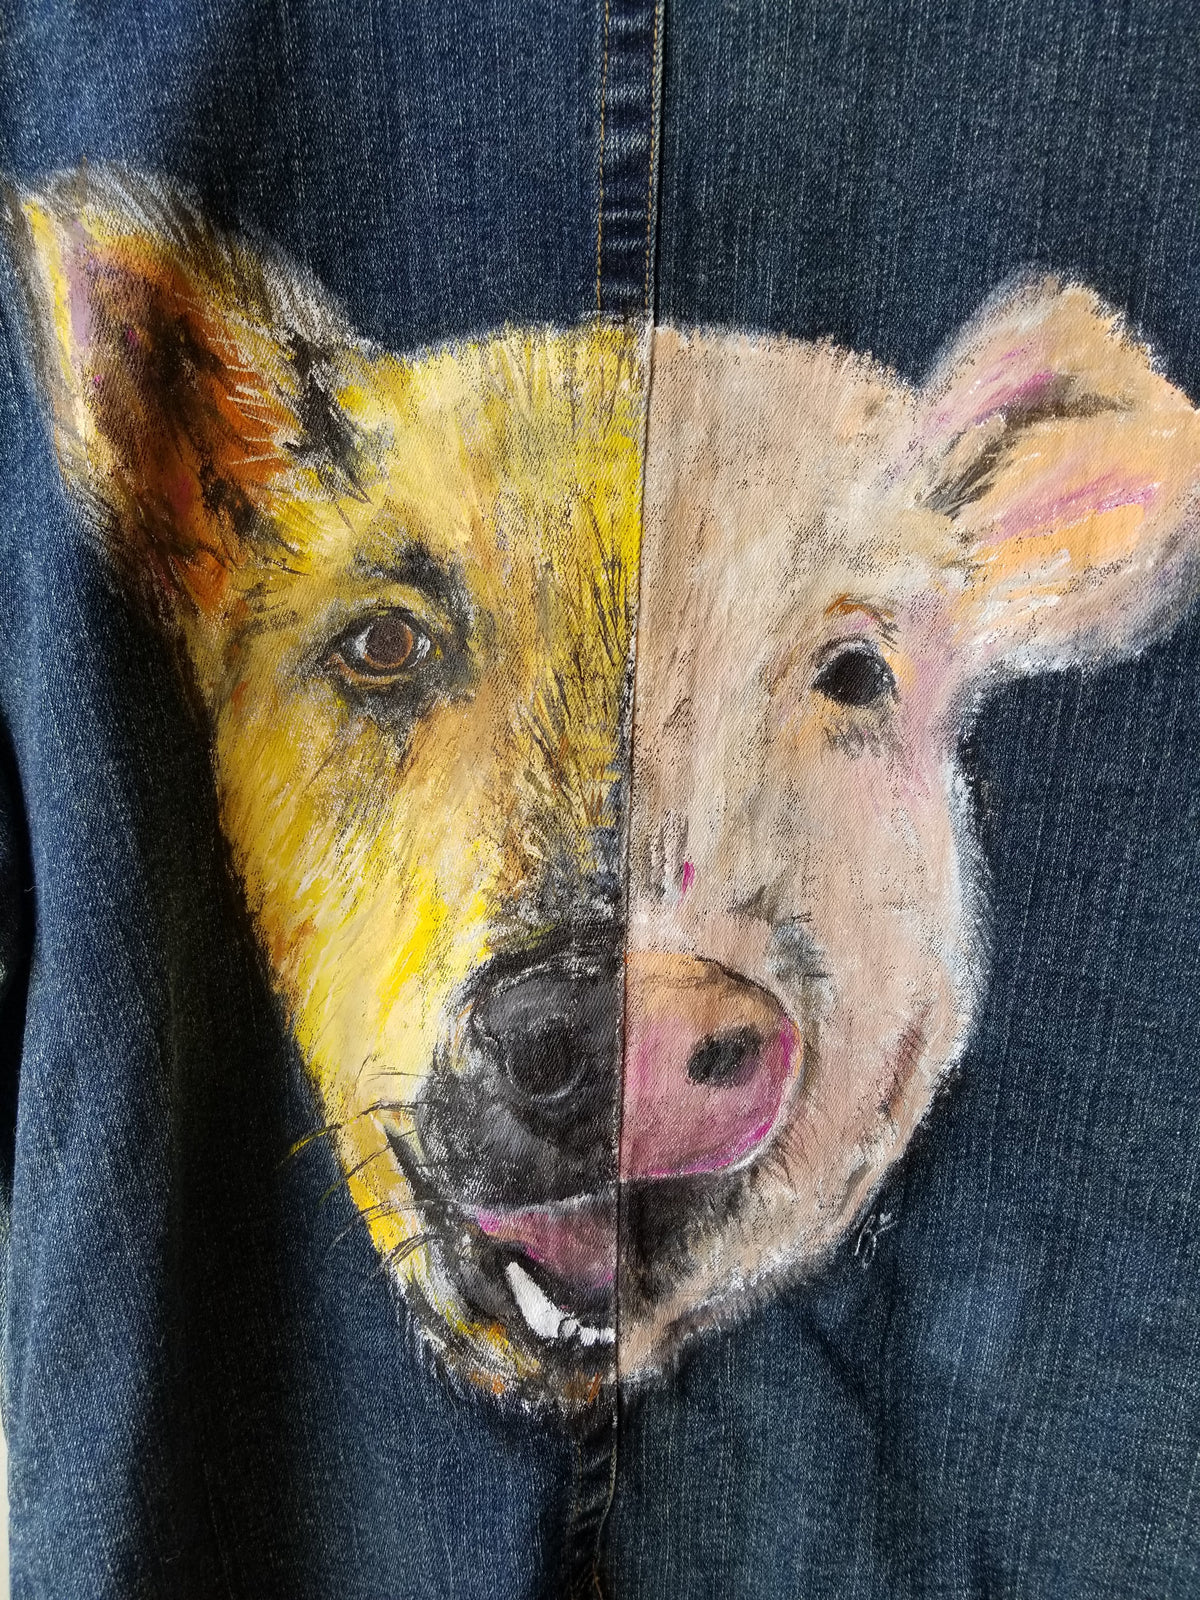 SOLD - Upcycled Jean Jacket Vest Vegan Club featuring a half pig / half dog, hand-painted by artist Brandi Jae